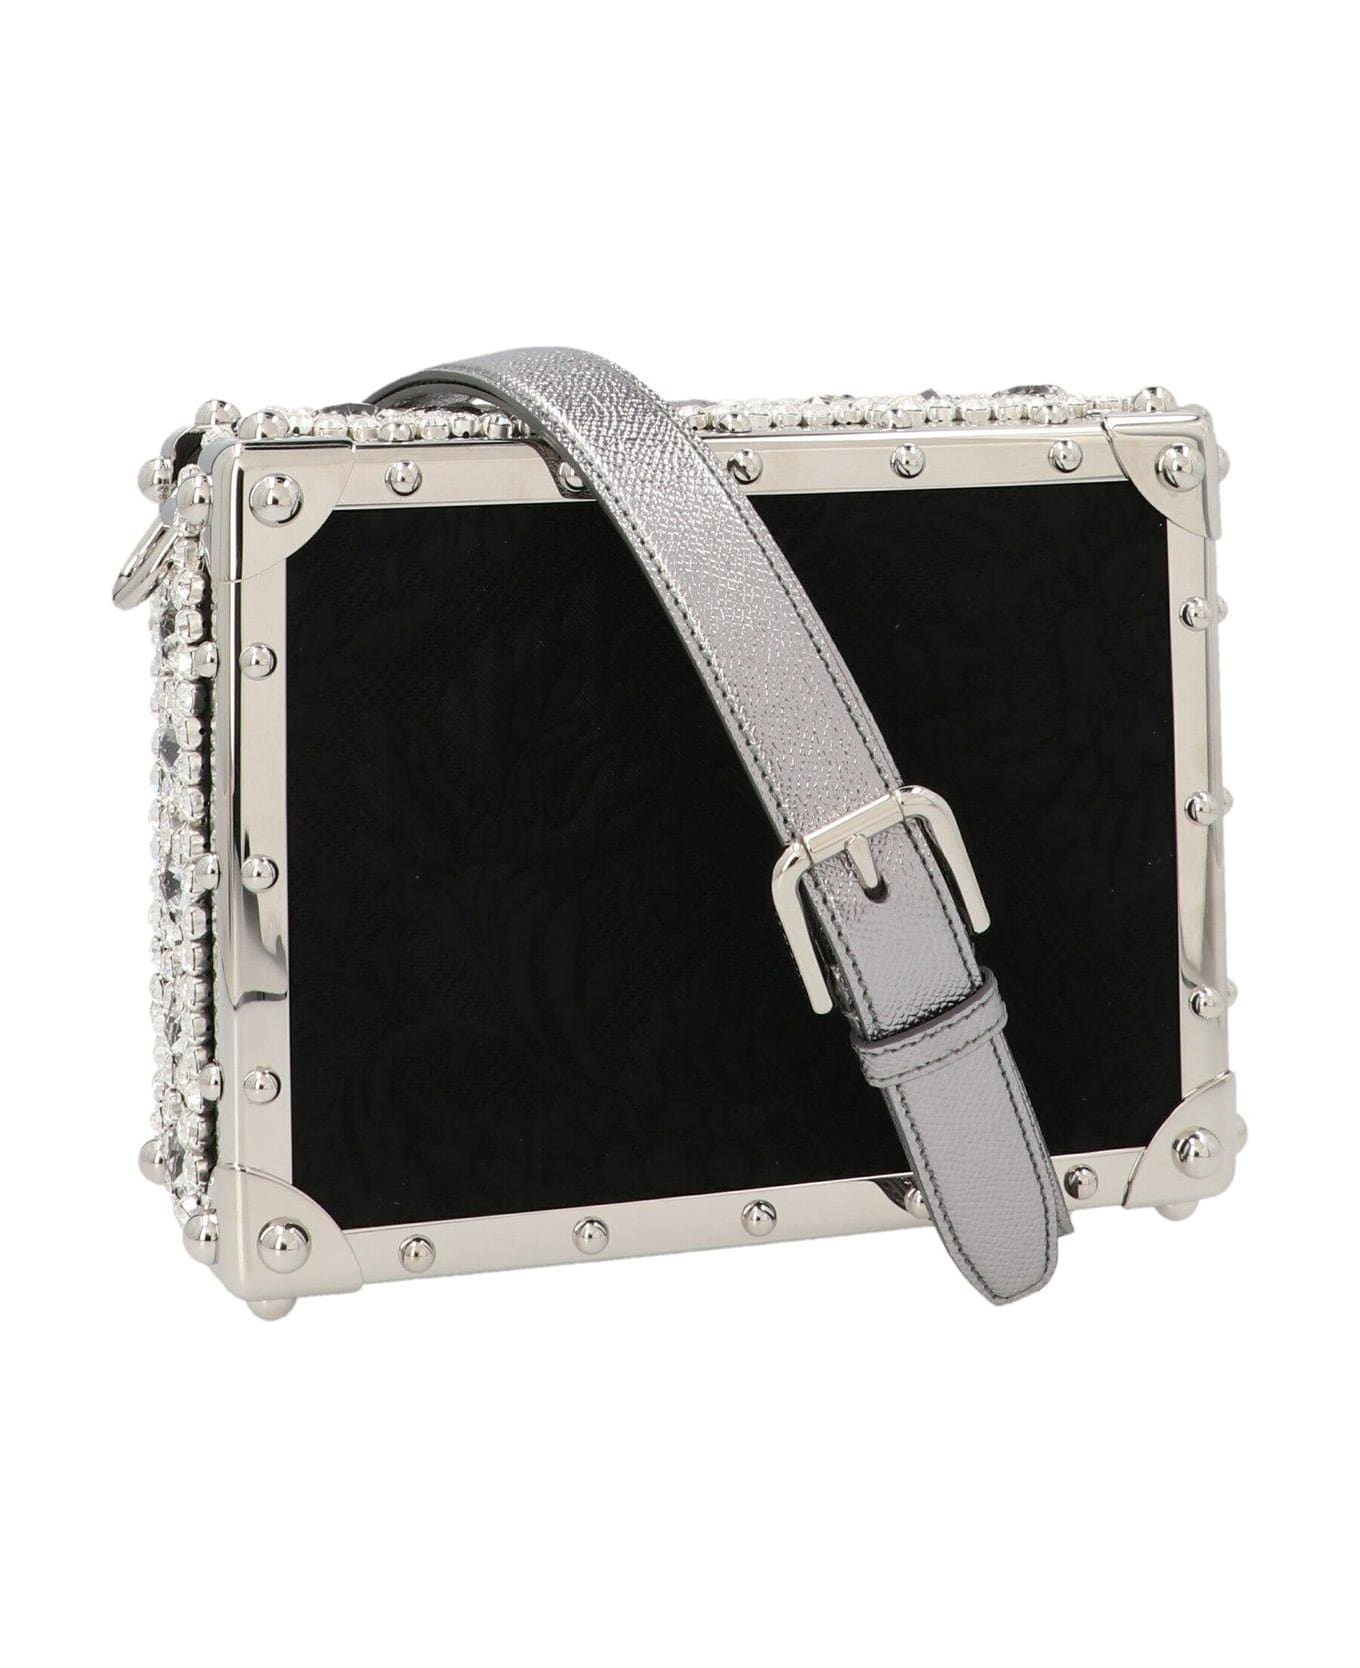 Dolce & Gabbana Embellished Tote Bag - Silver クラッチバッグ